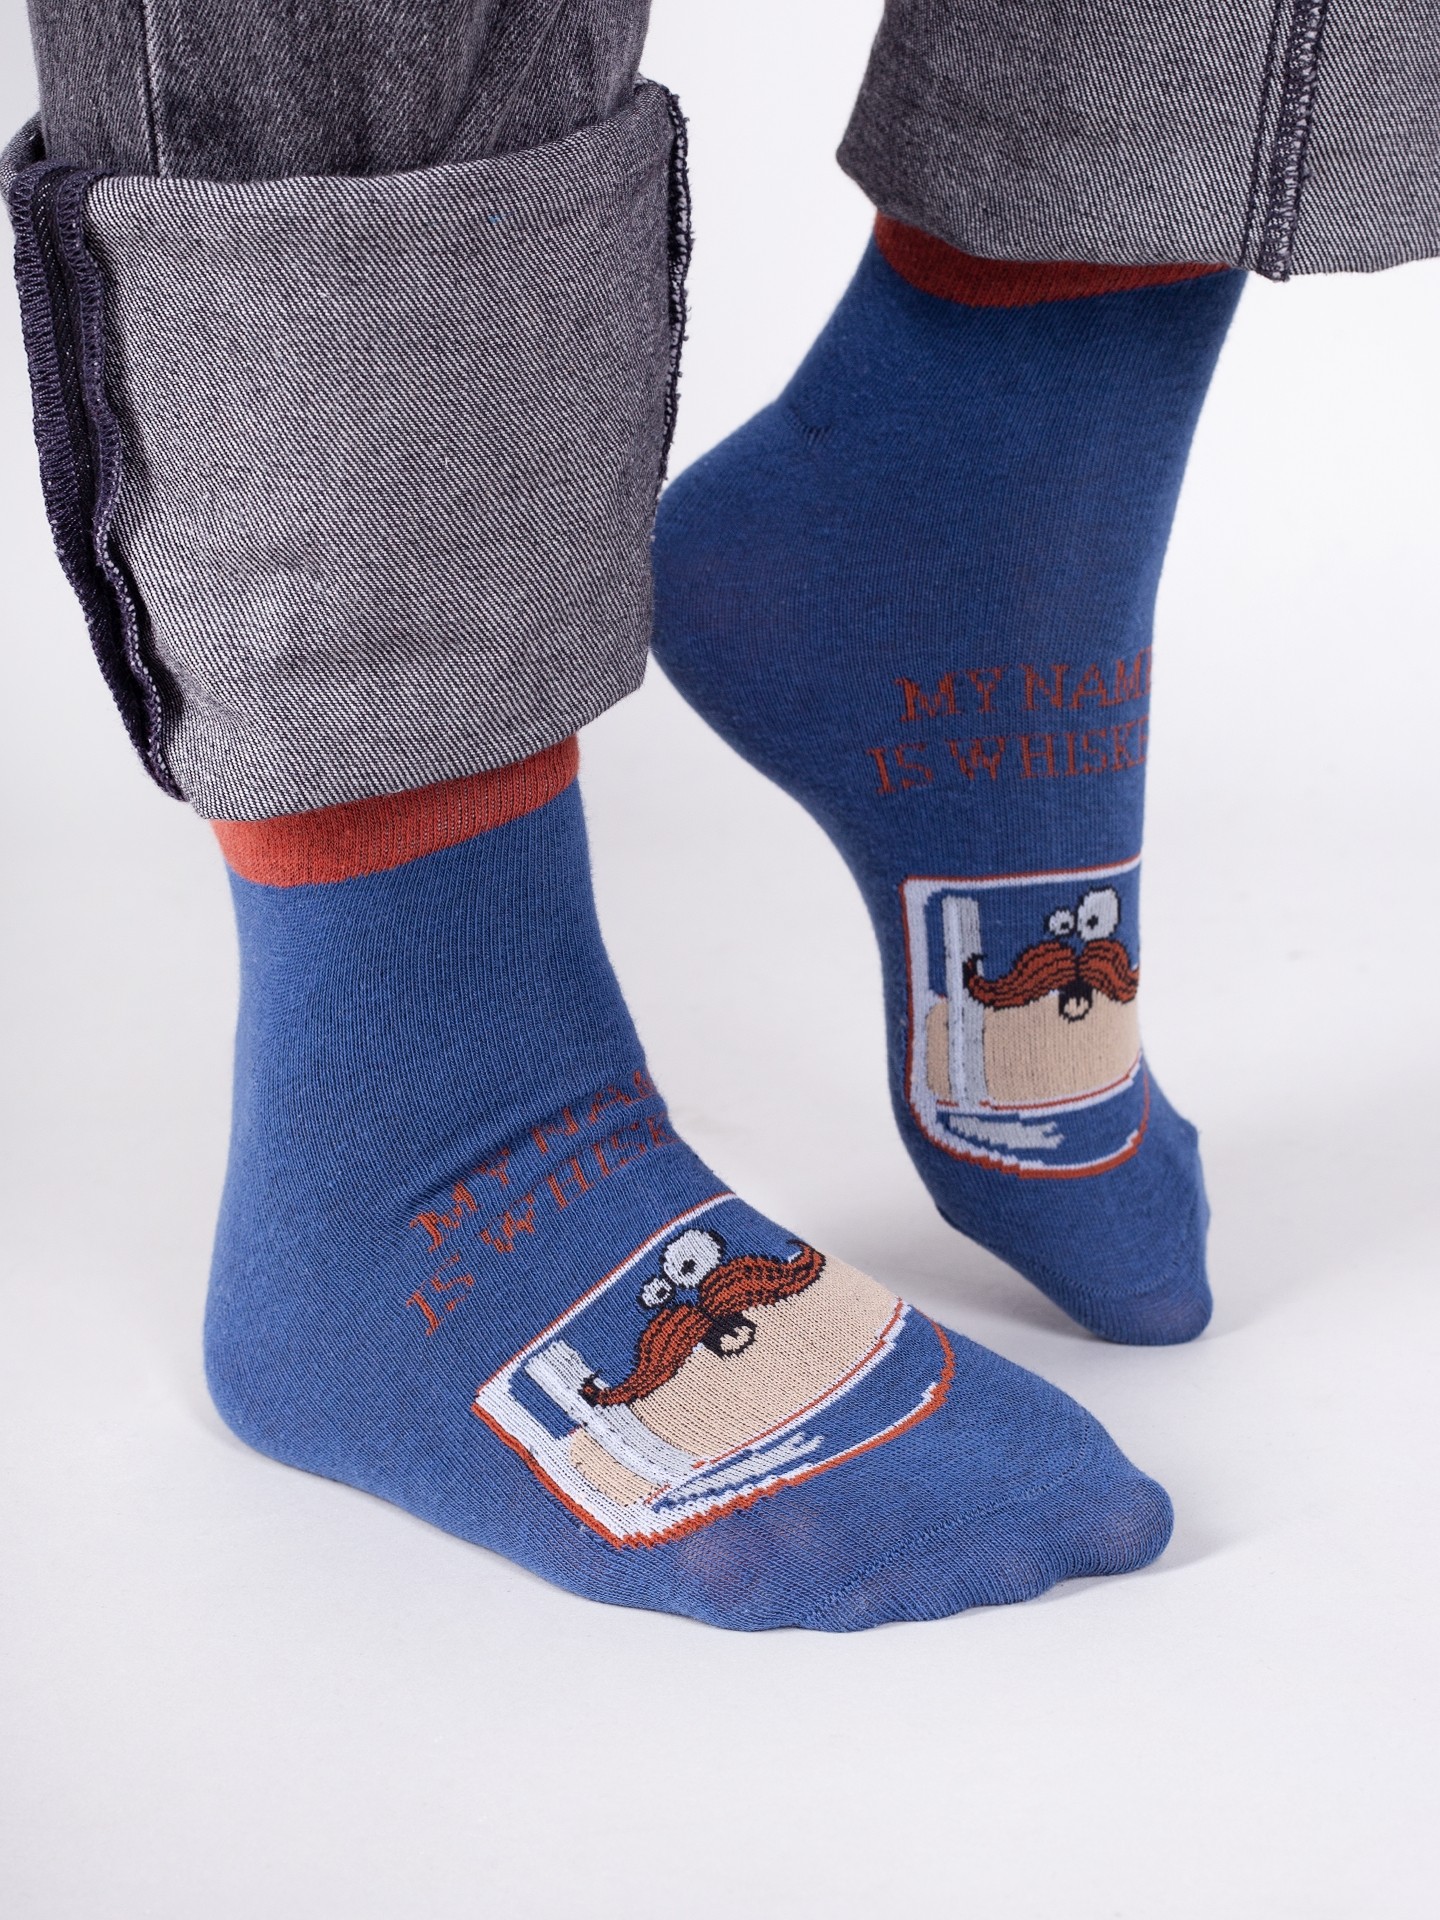 Yoclub Man's Cotton Socks Patterns Colors SKS-0086F-C100